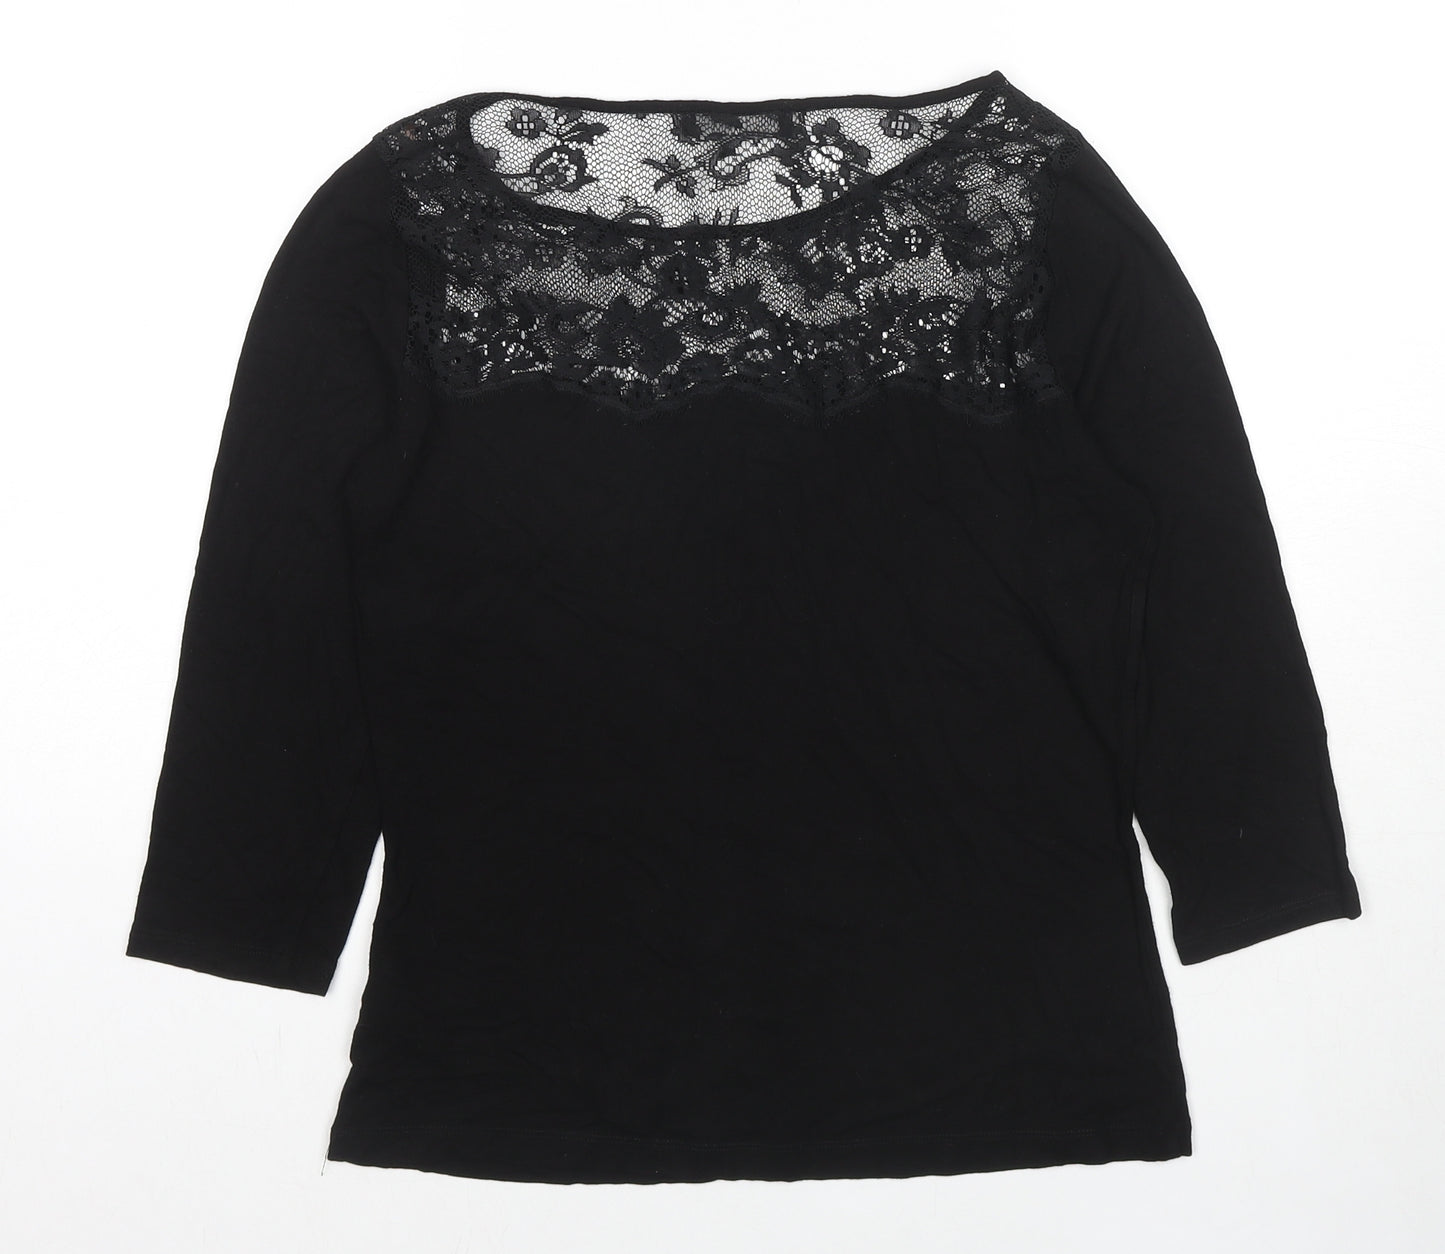 Marks and Spencer Womens Black Viscose Basic Blouse Size 12 Boat Neck - Lace